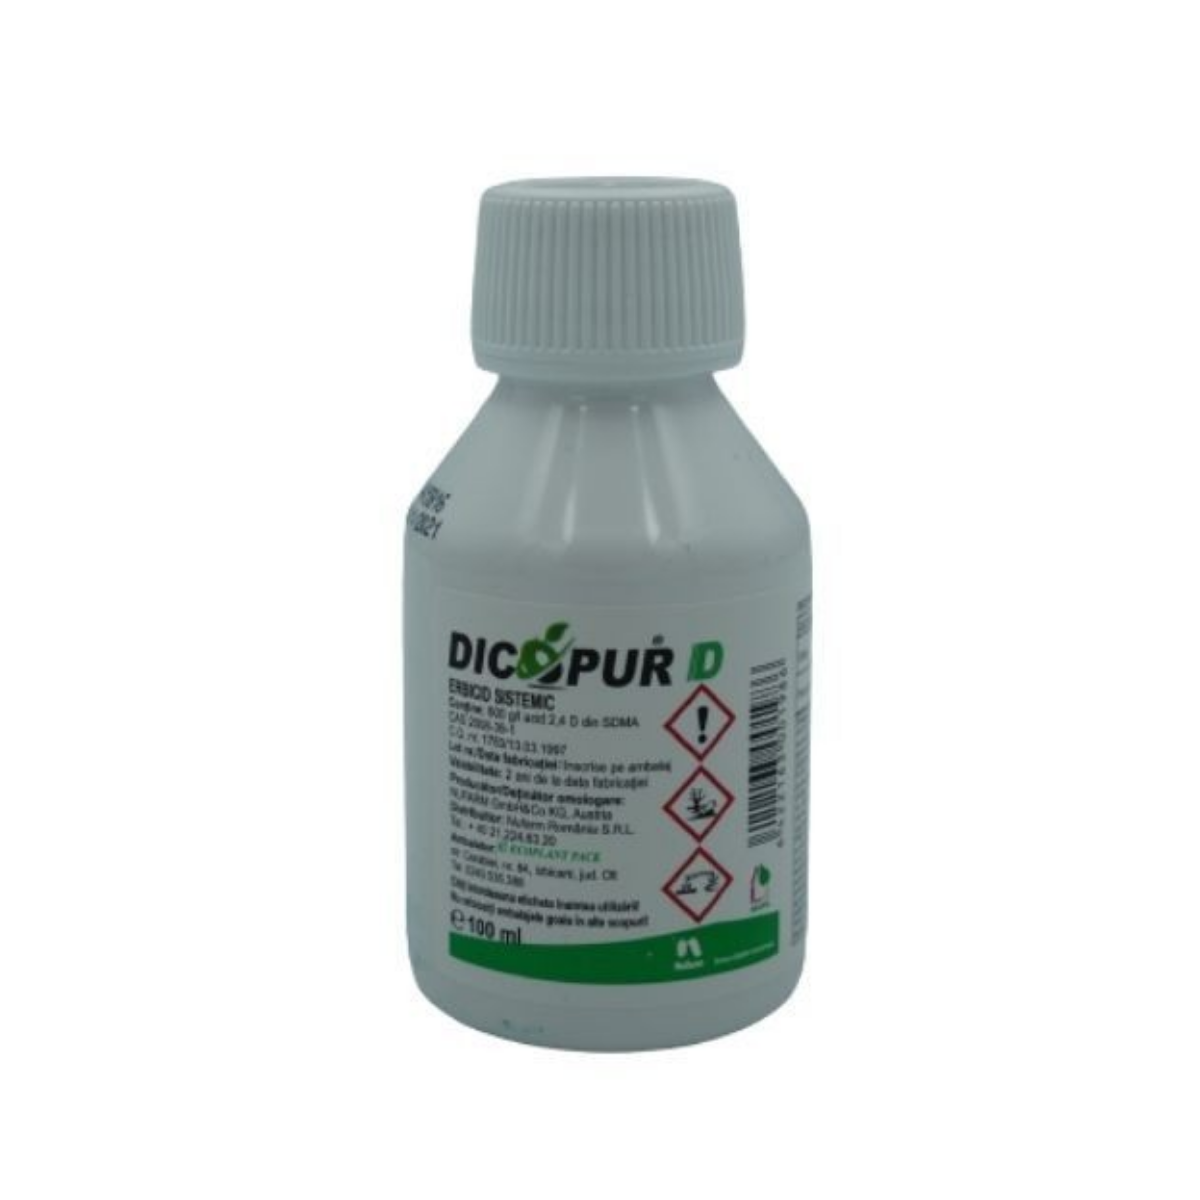 Erbicide - Erbicid 2.4 D pentru grau si porumb Dicopur D, 100 ML, hectarul.ro